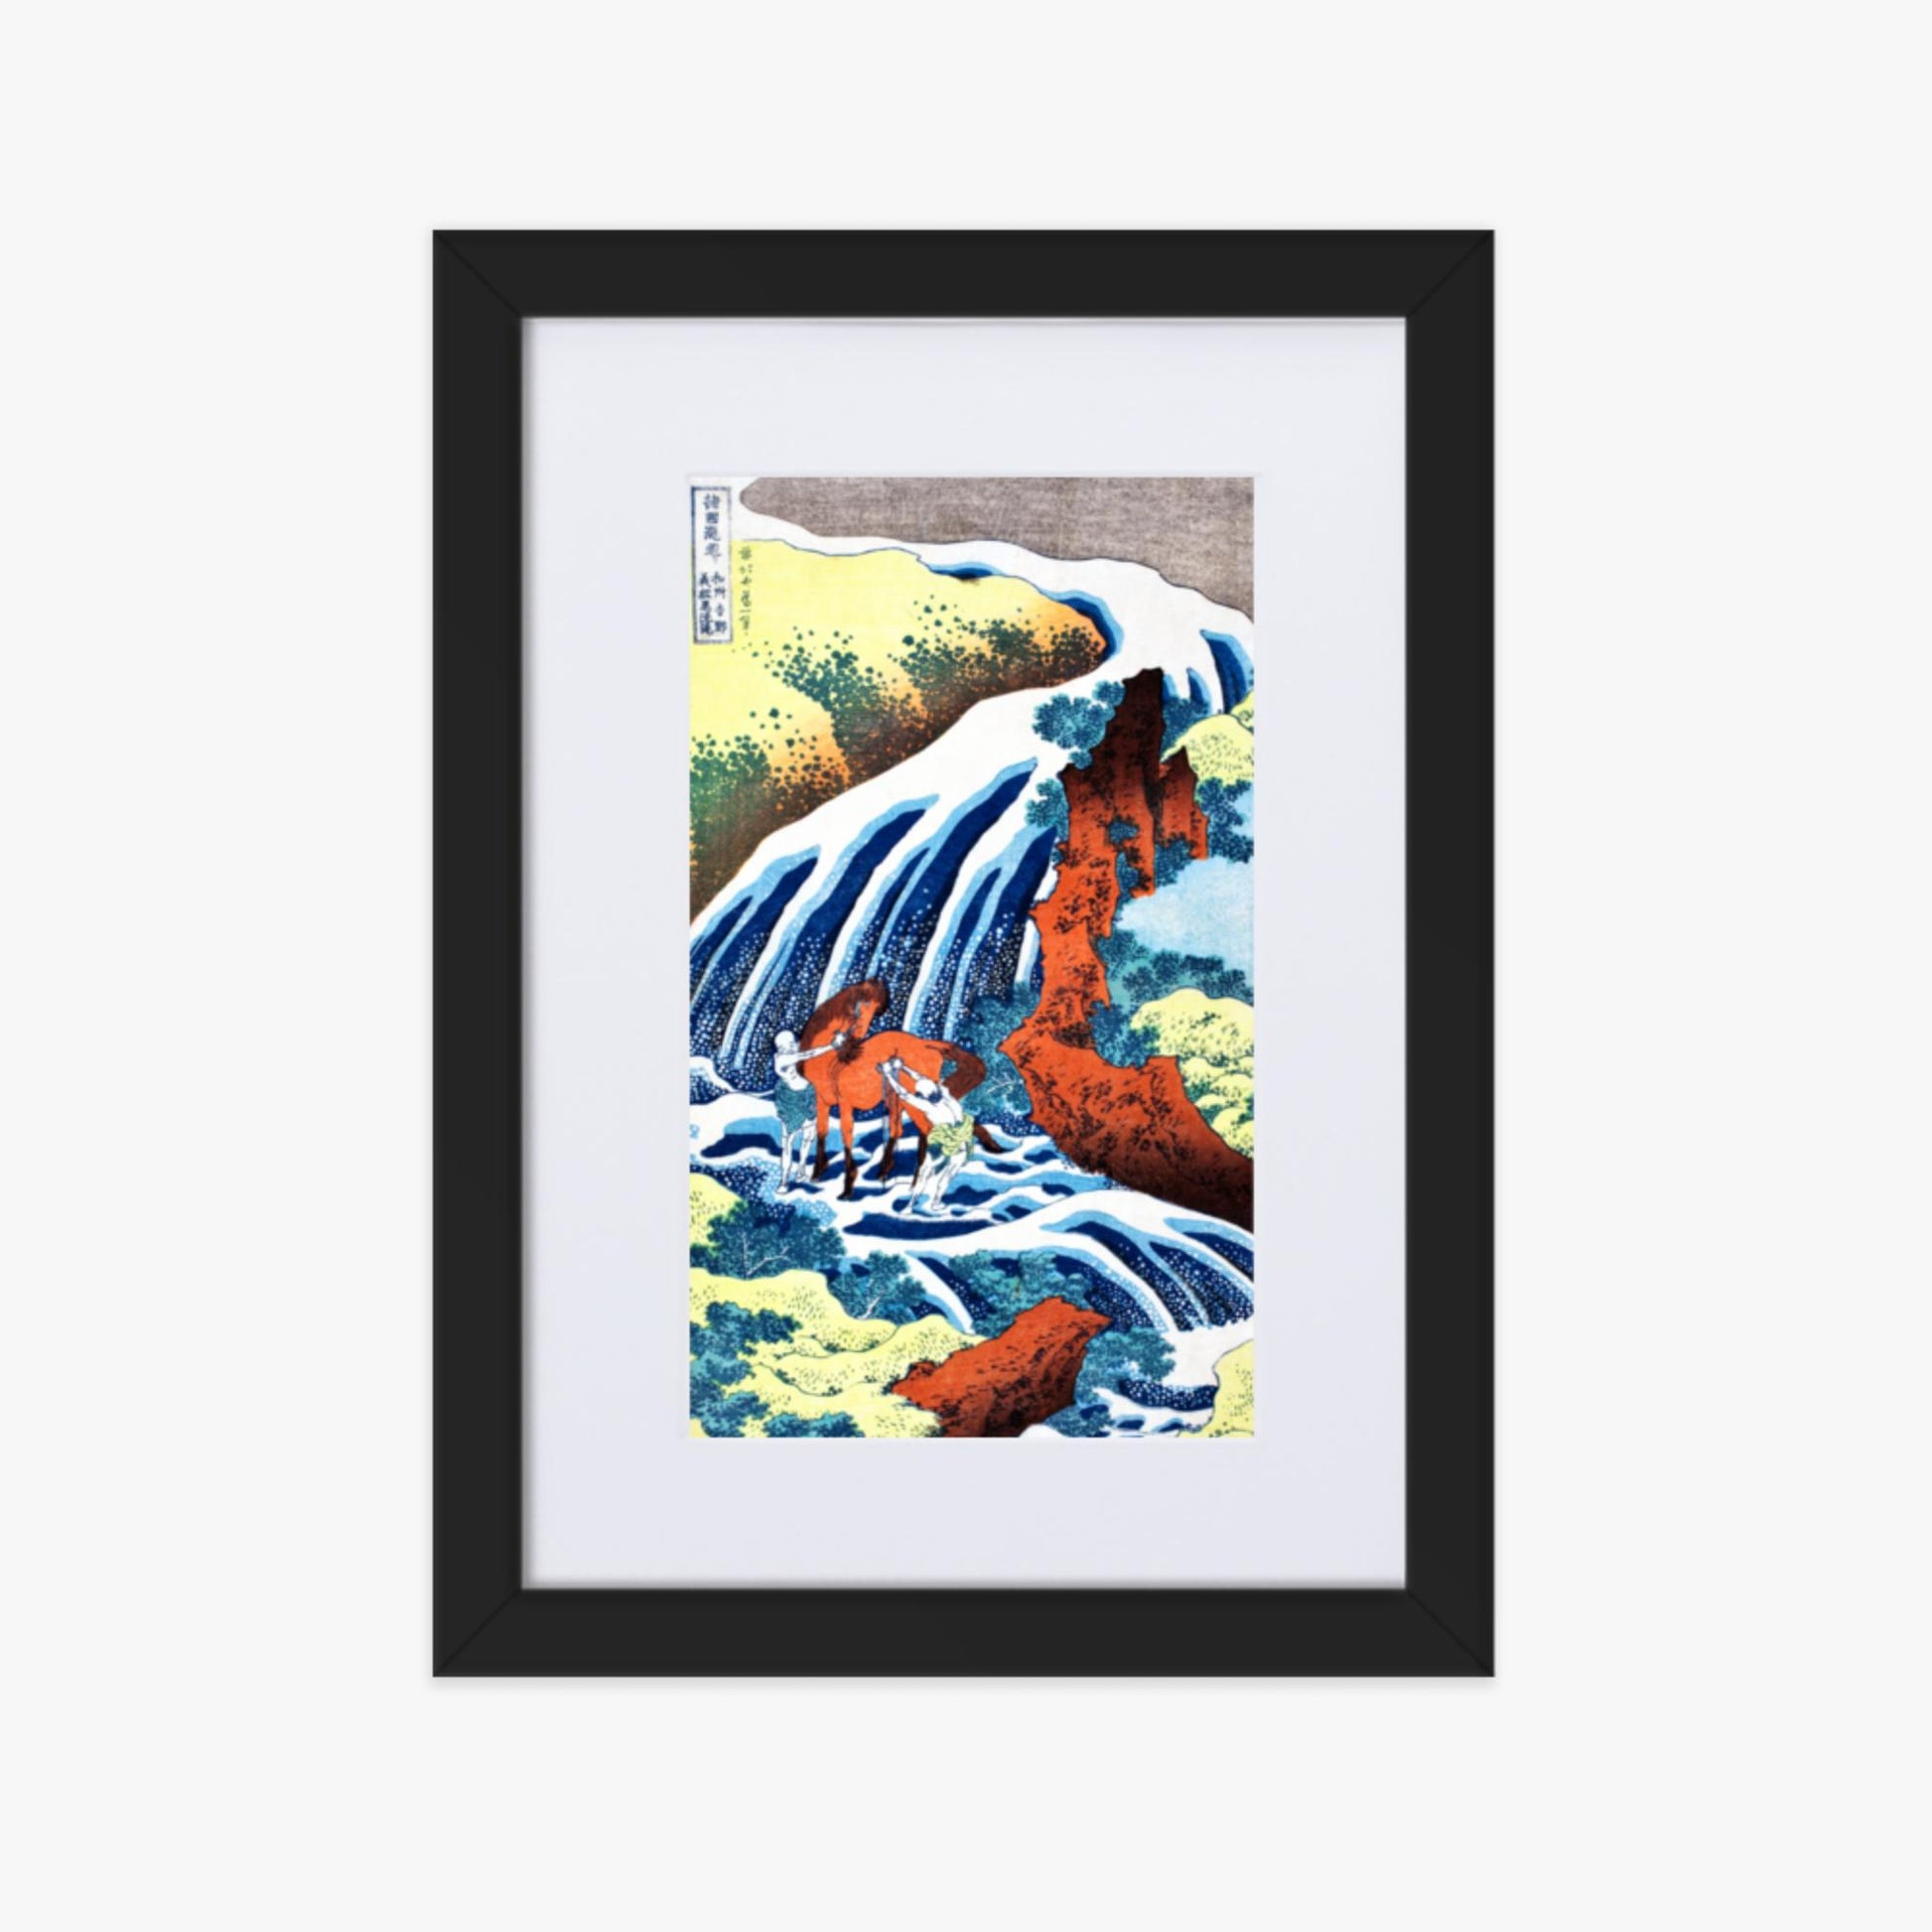 Katsushika Hokusai - The Yoshitsune Horse-Washing Falls at Yoshino, Izumi Province 21x30 cm Poster With Black Frame